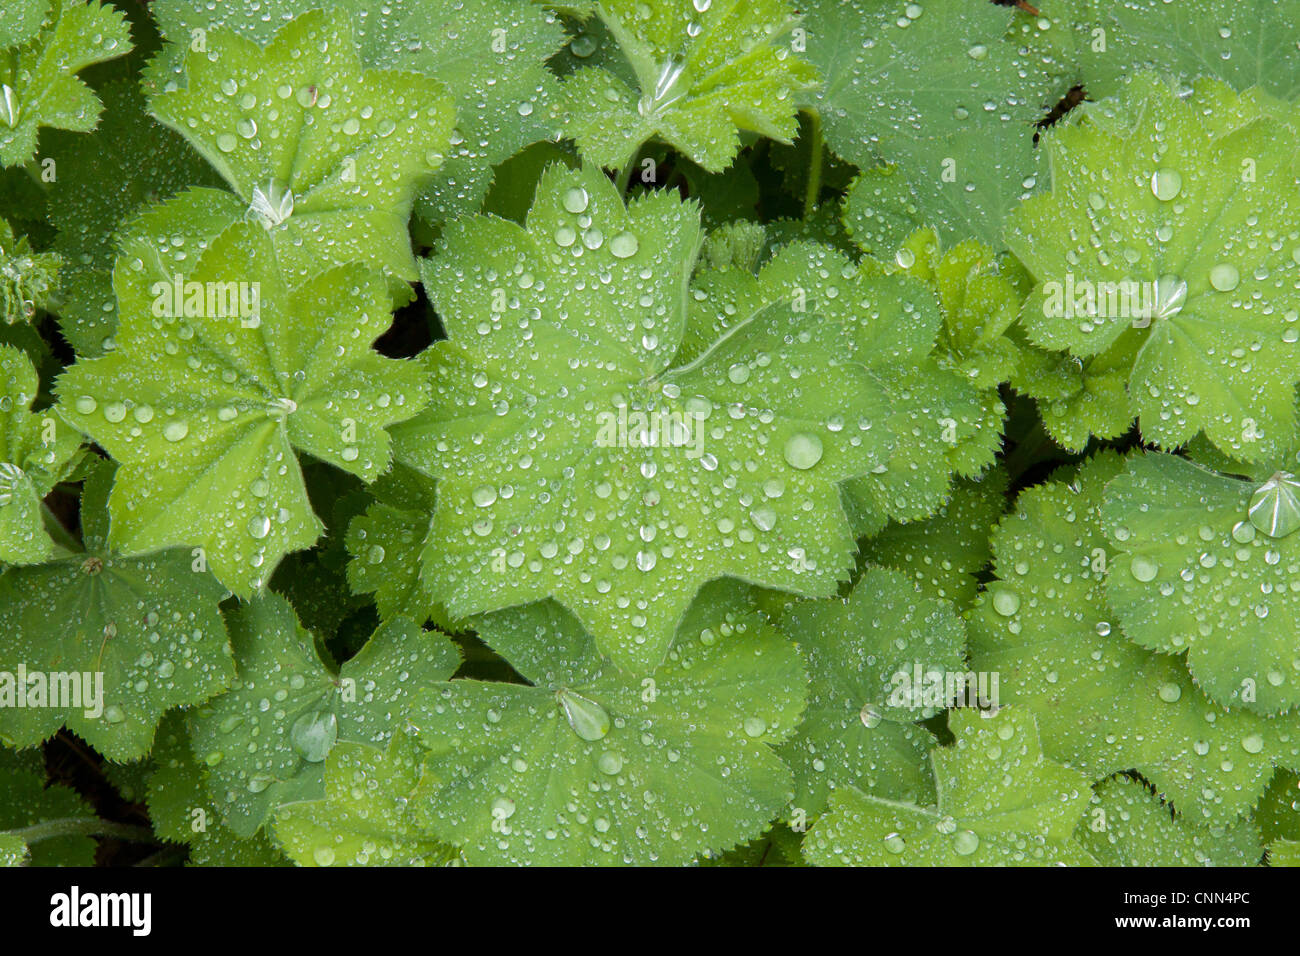 Raindrops on lady's mantle (alchemilla mollis) leaves. Stock Photo